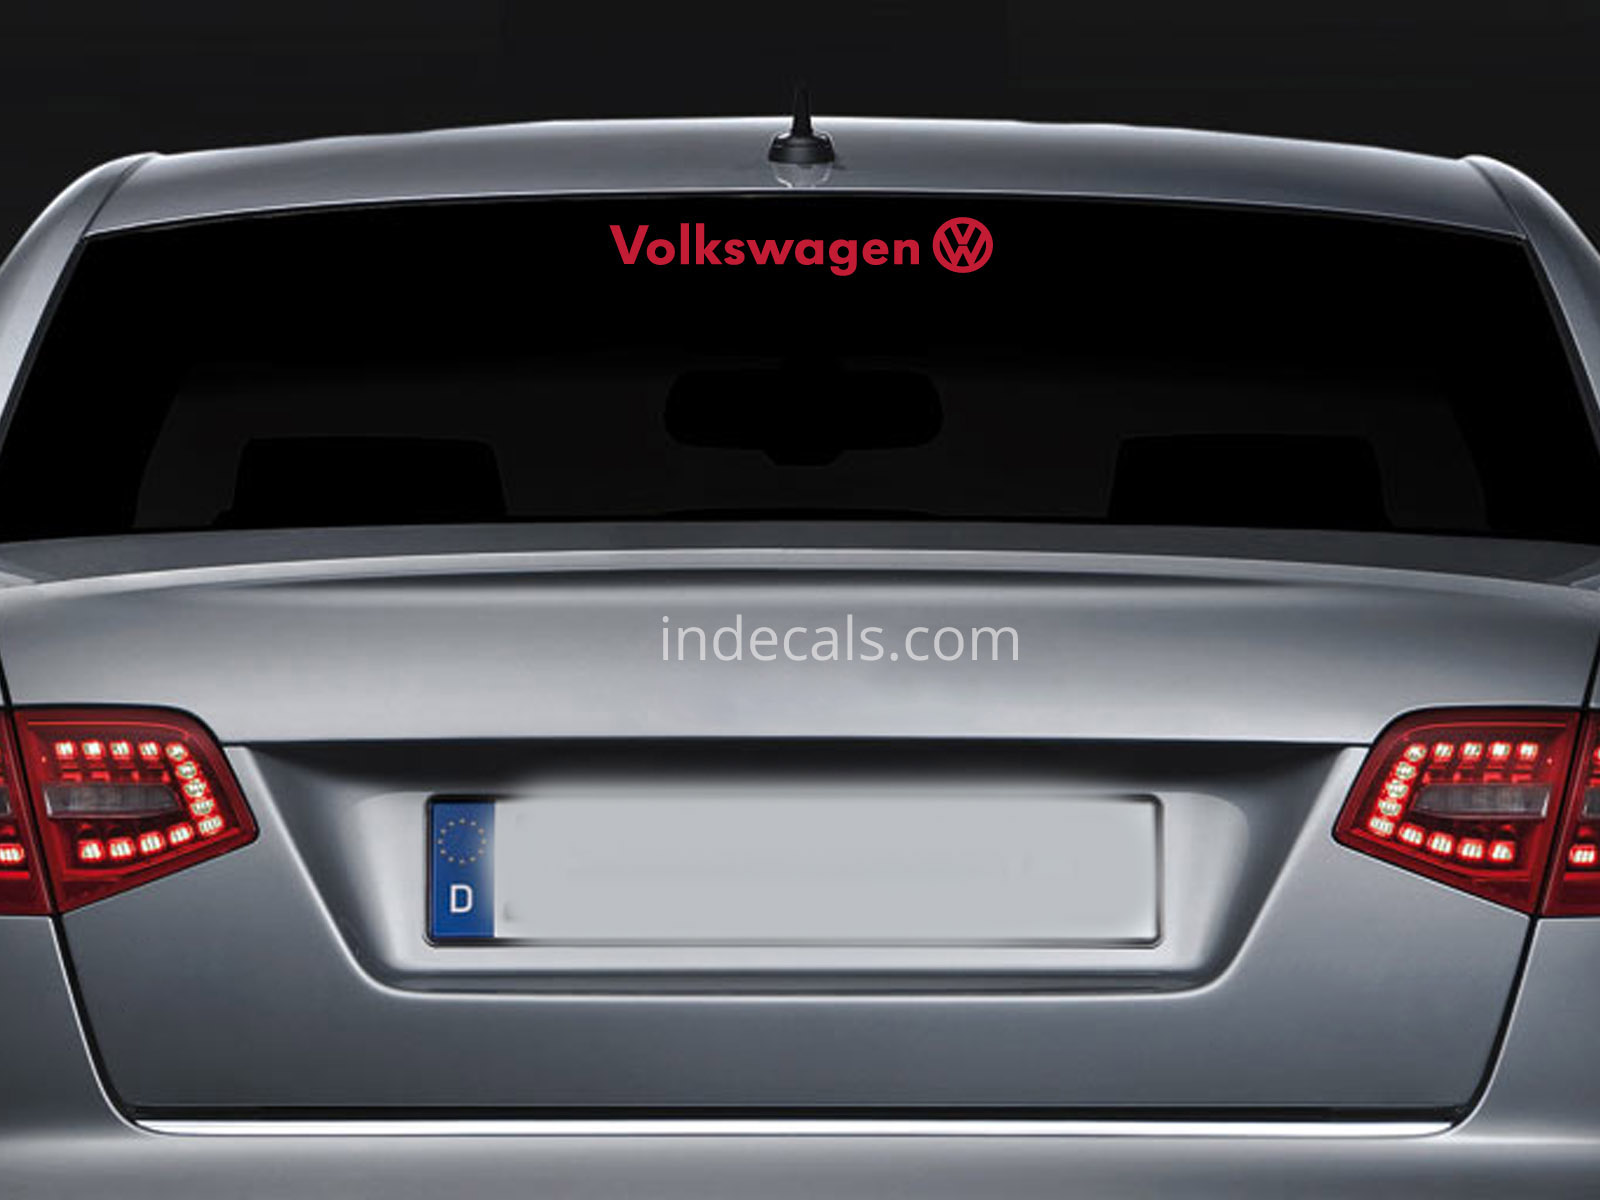 1 x Volkswagen Sticker for Windshield or Back Window - Red